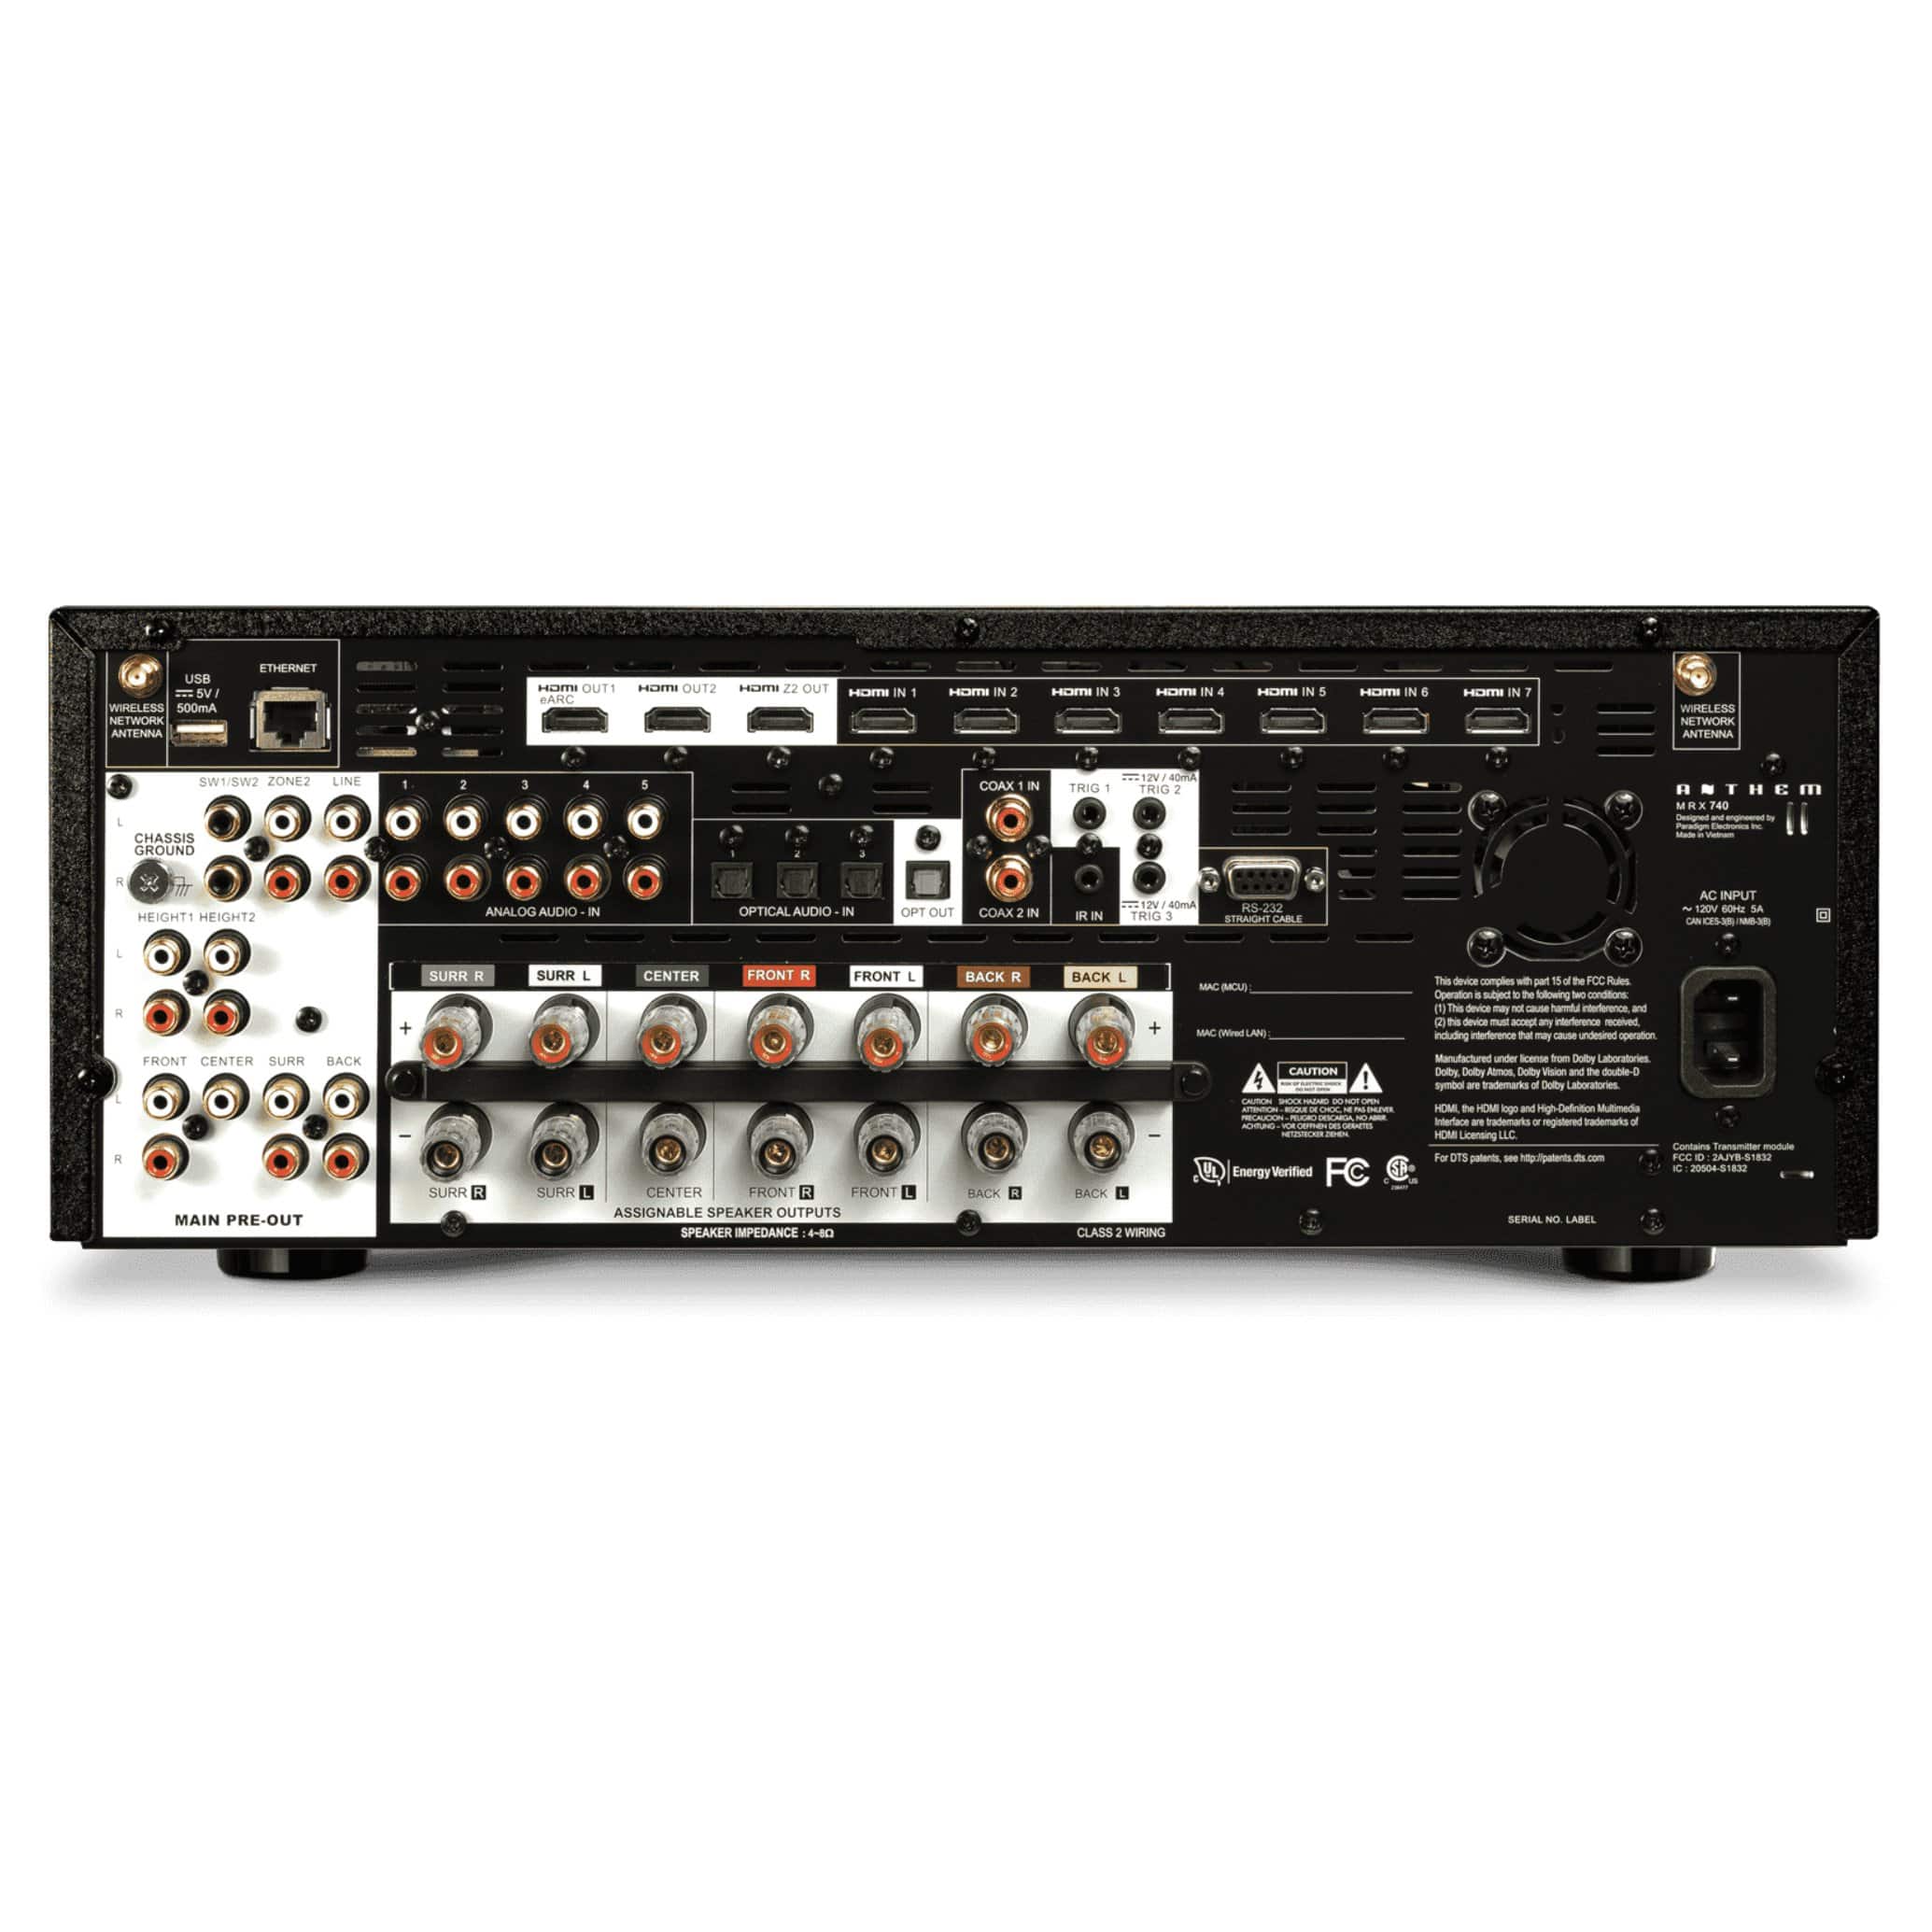 Anthem MRX 740 11.2 Pre-Amplifier / 7 Amplifier Channel A/V Receiver